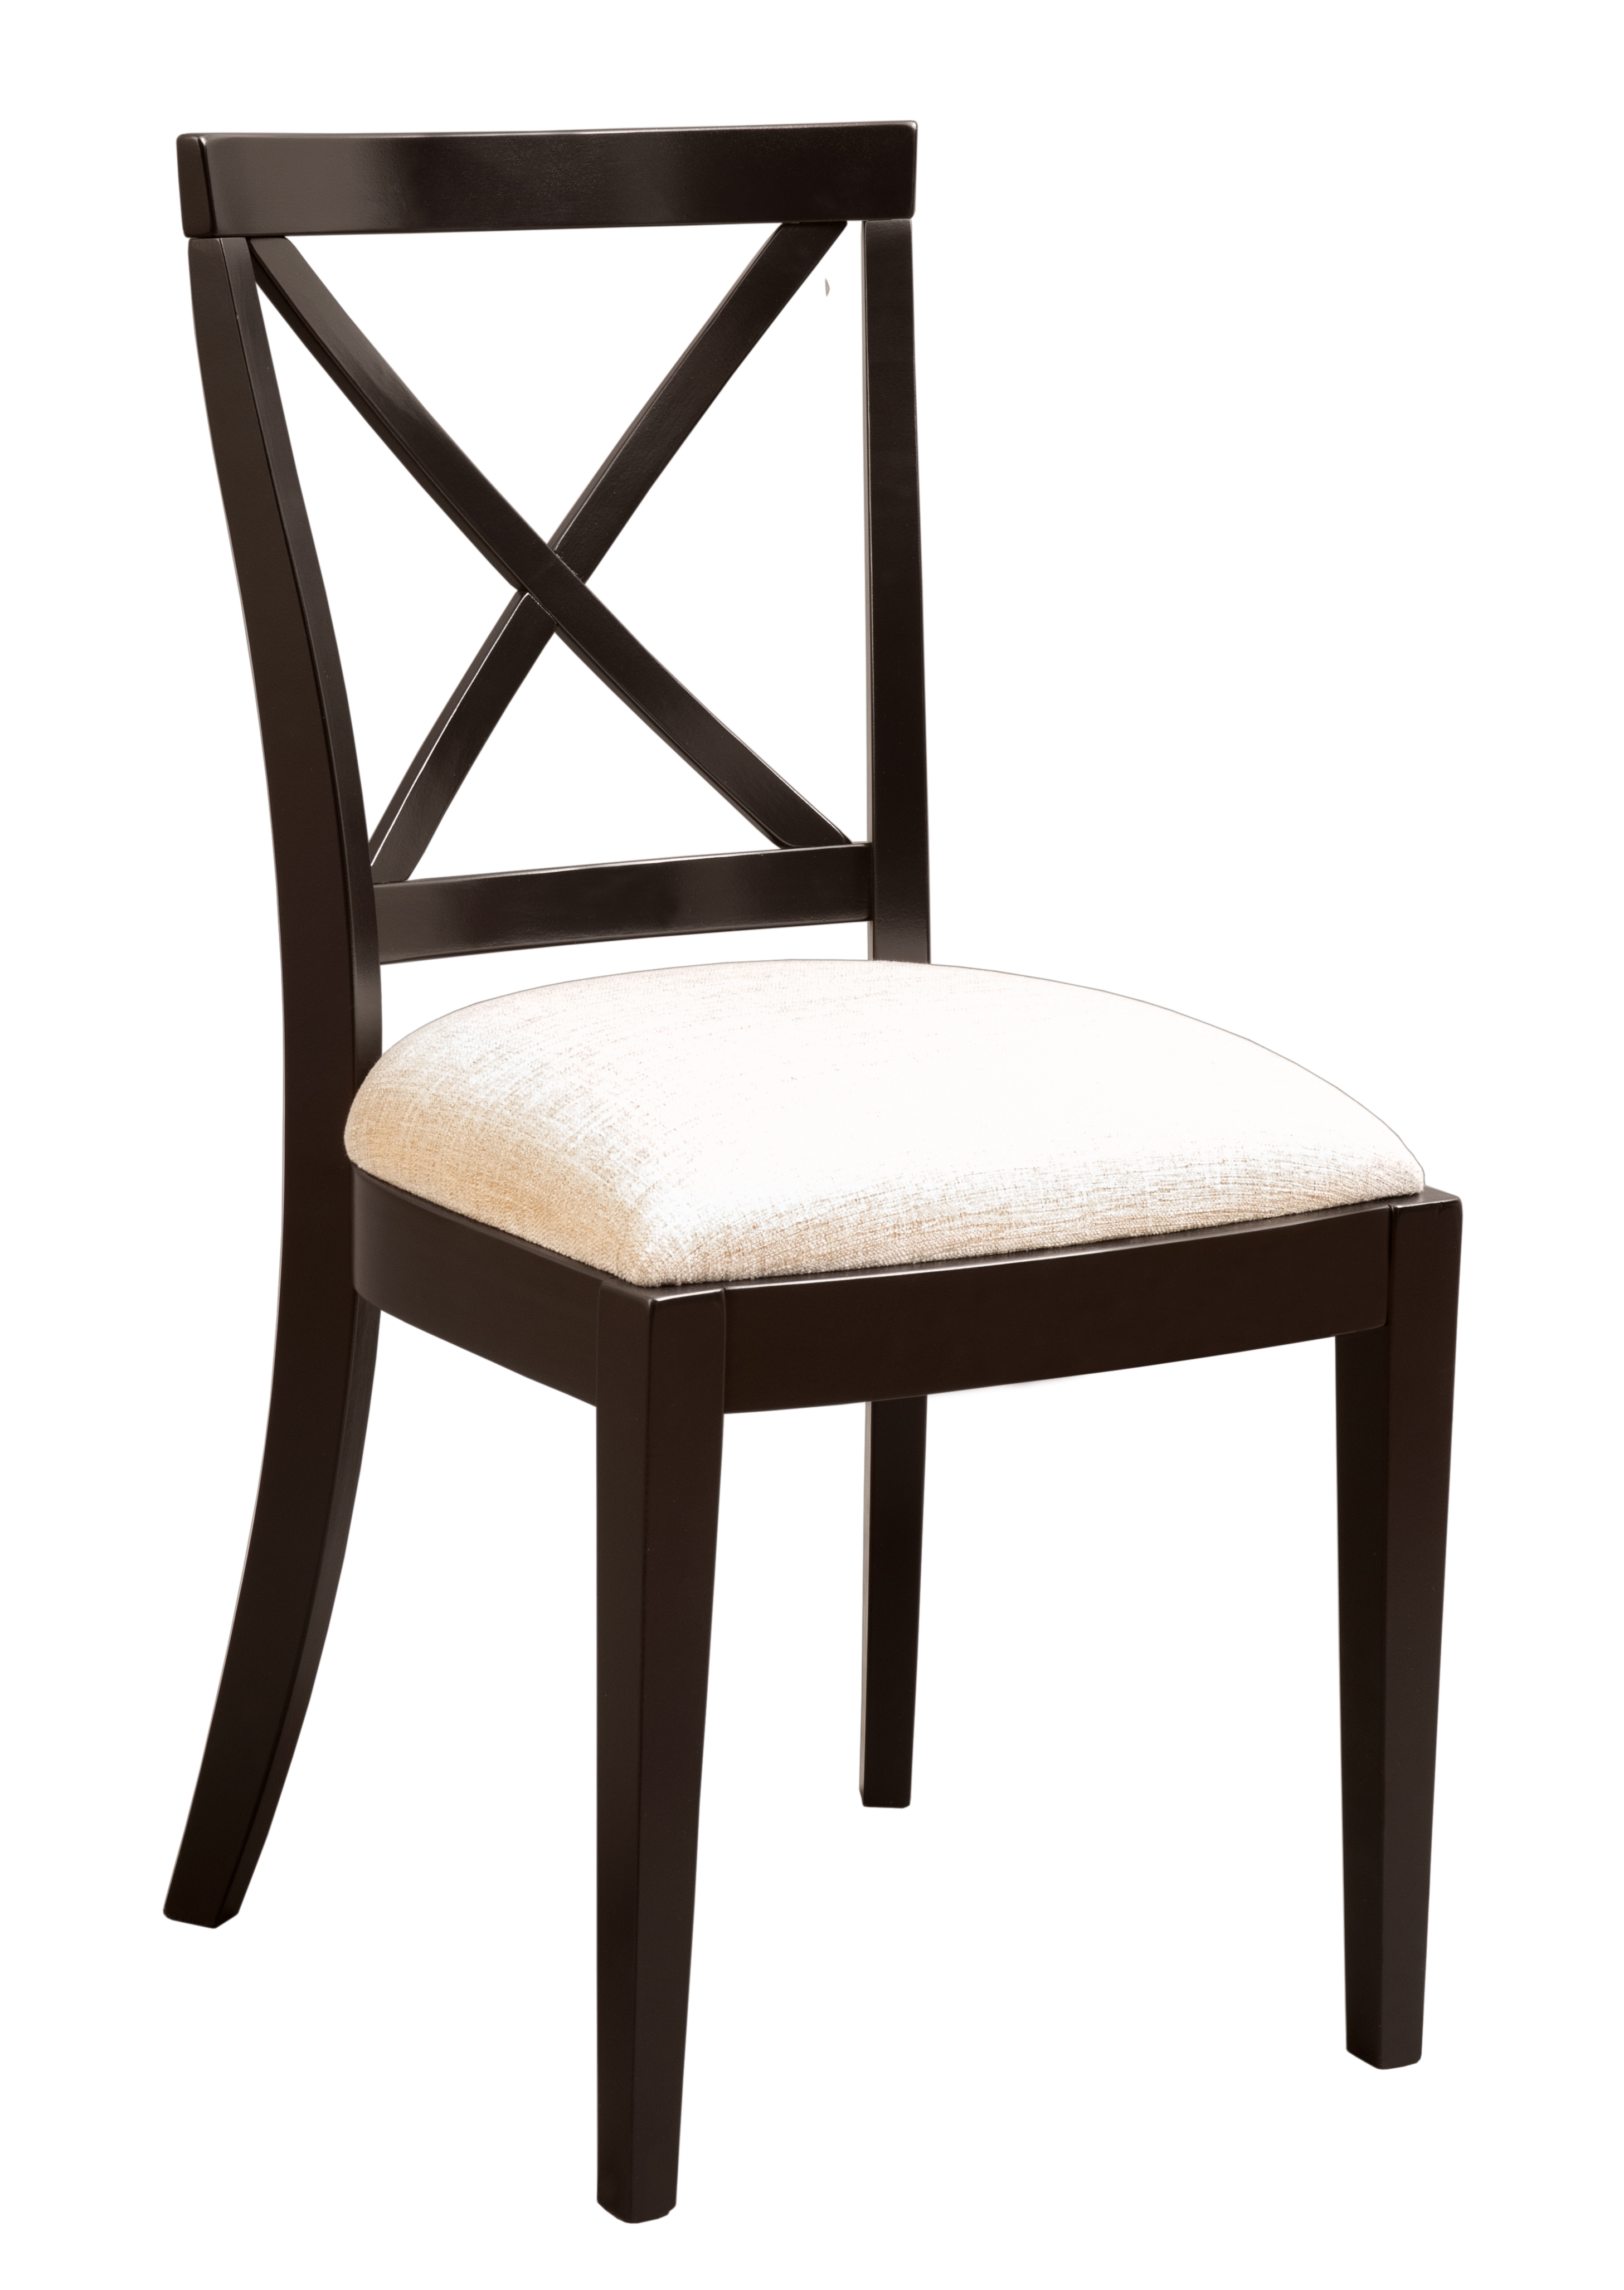 Designer Waverly Side Chair Image